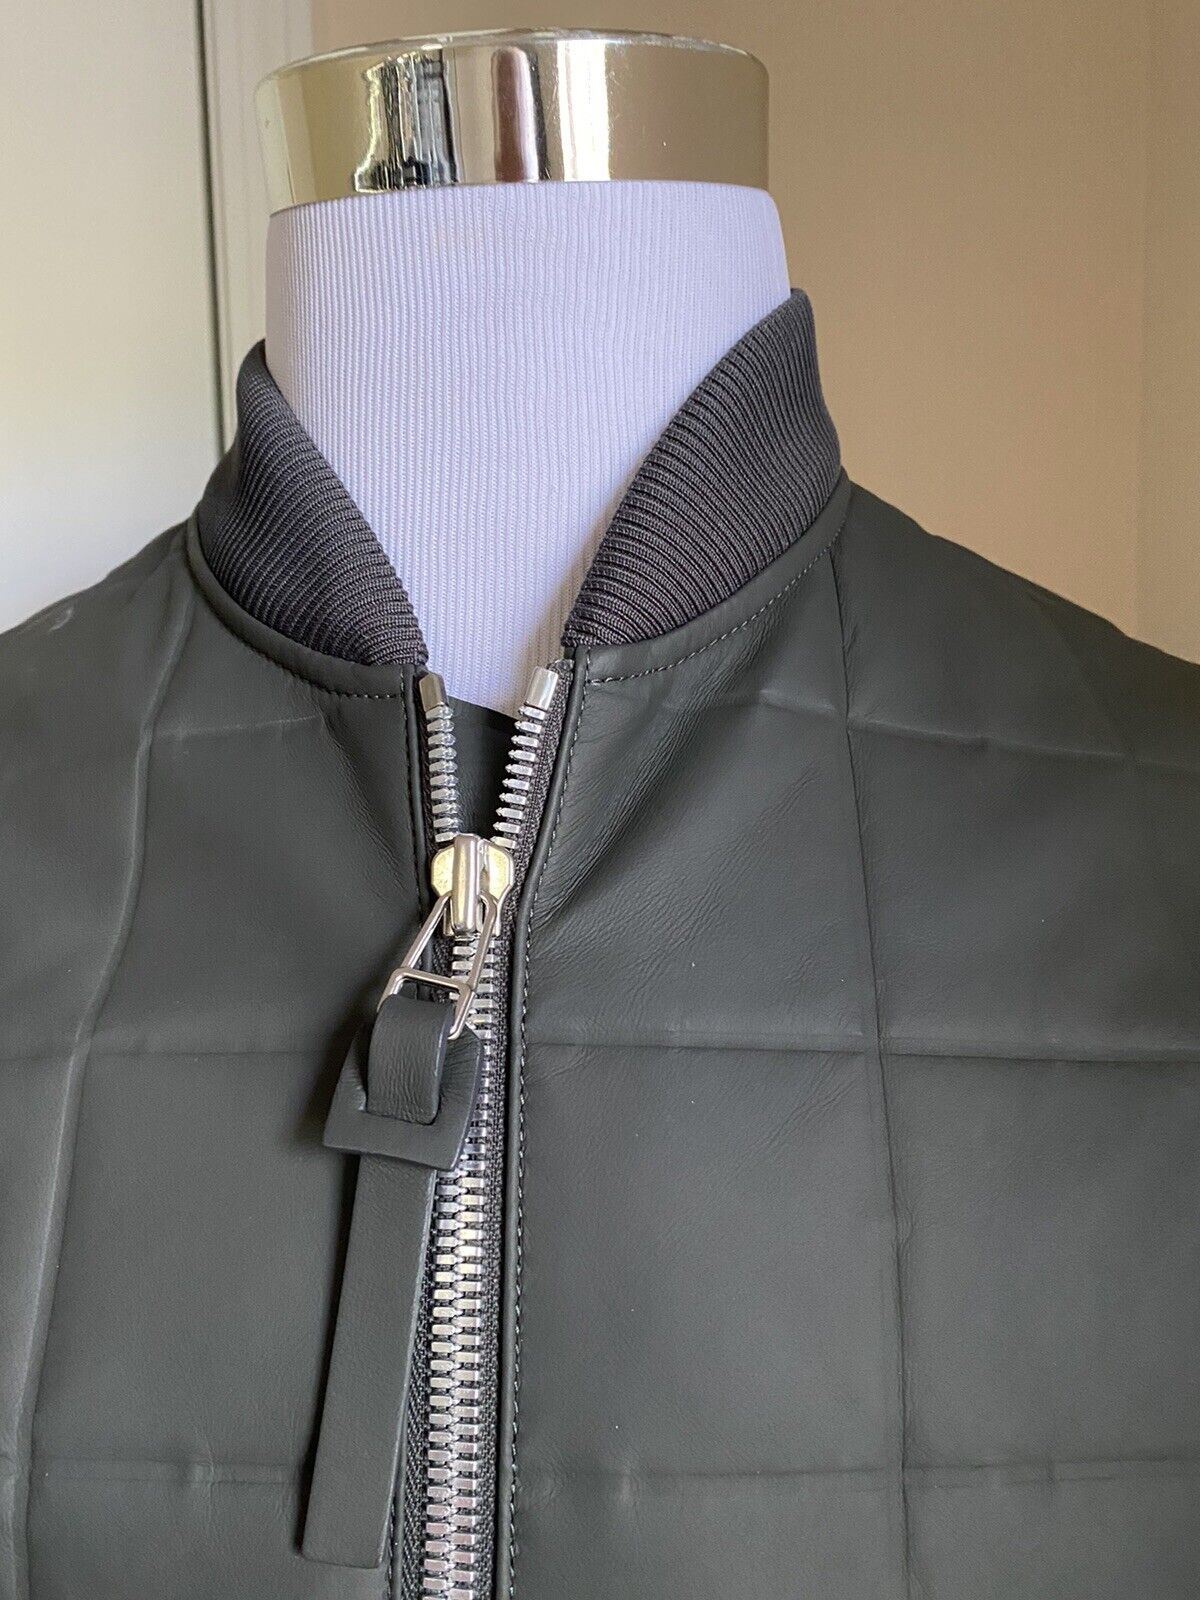 New $6700 Bottega Veneta Men Oversized Light Leather Jacket Coat 44 US/54 Eu